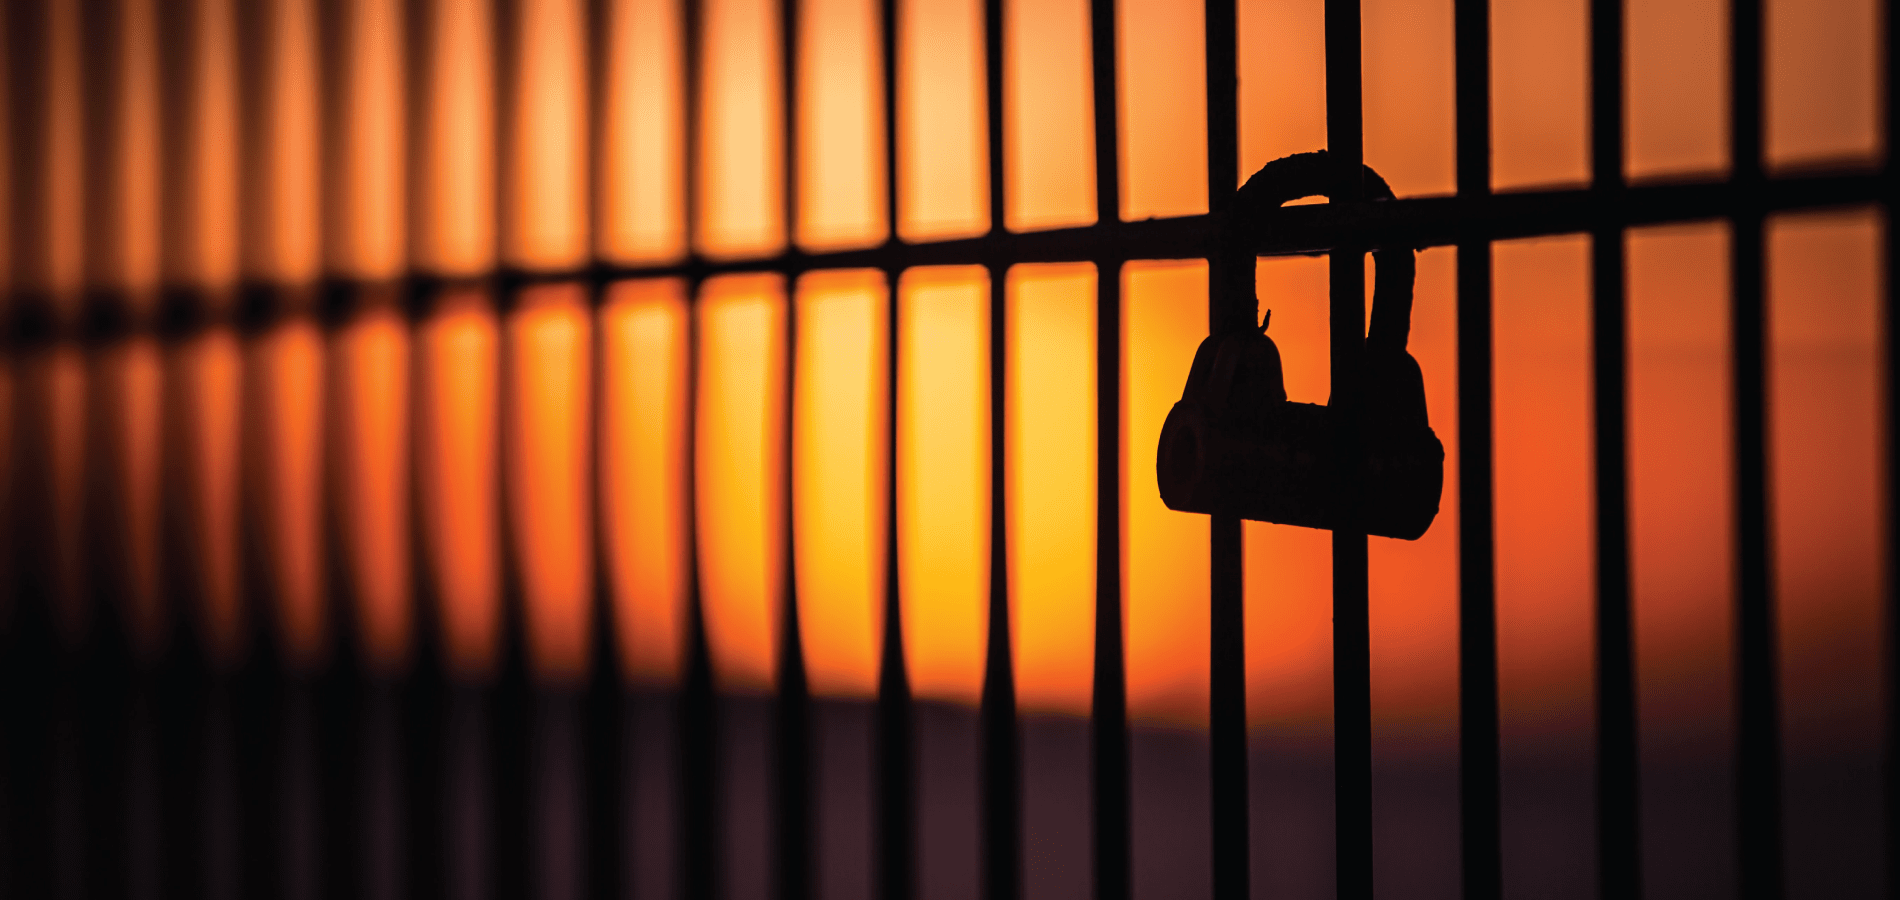 Sunset through bars with lock